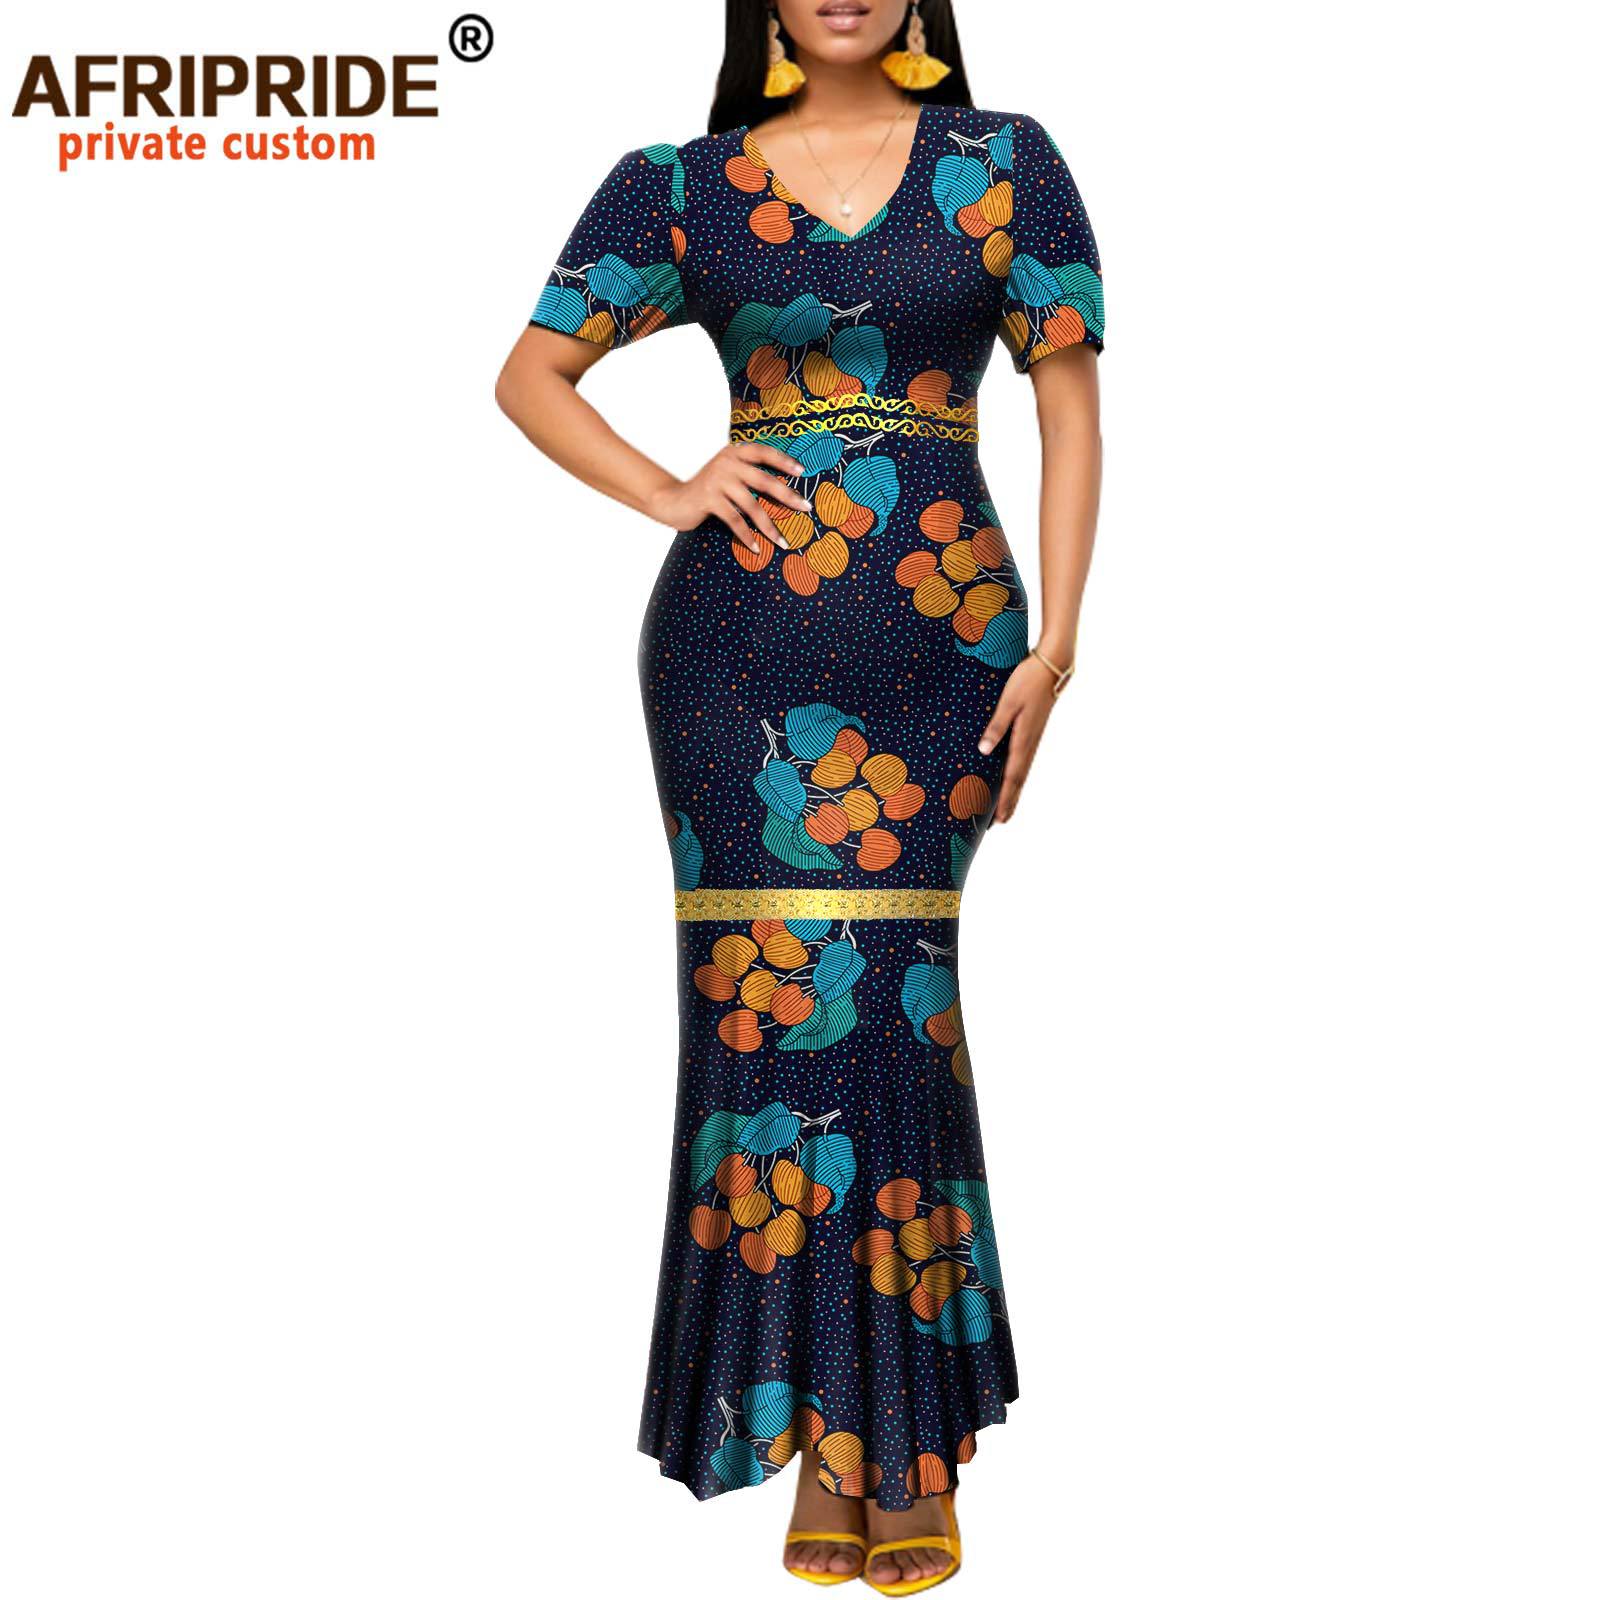 Foreign Trade Africa Duplex Printing Cotton Batik Fashion Large Size Women's Dress Afripride 2125025